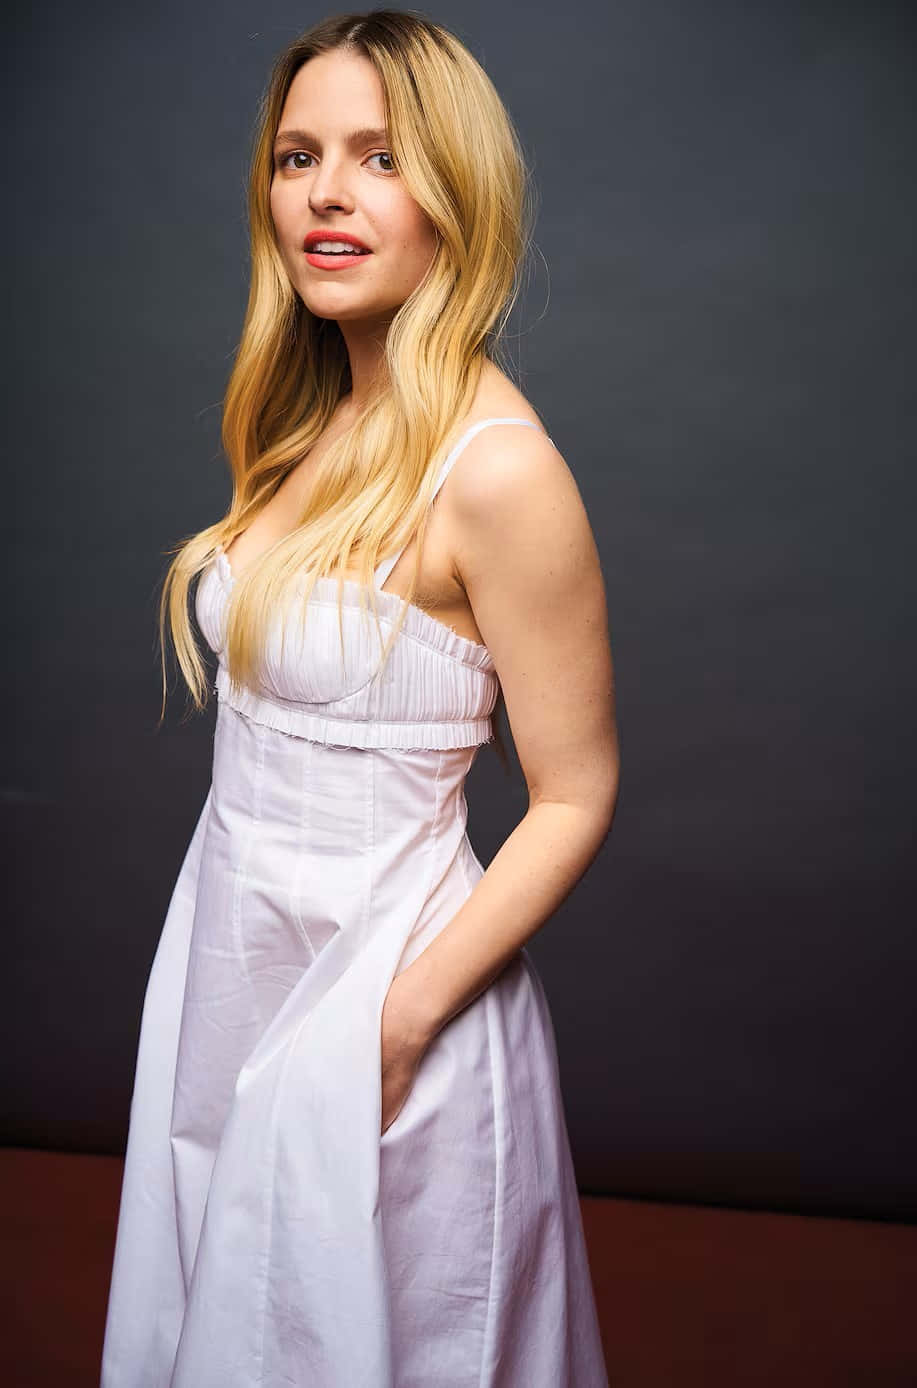 Blonde Womanin White Dress Wallpaper